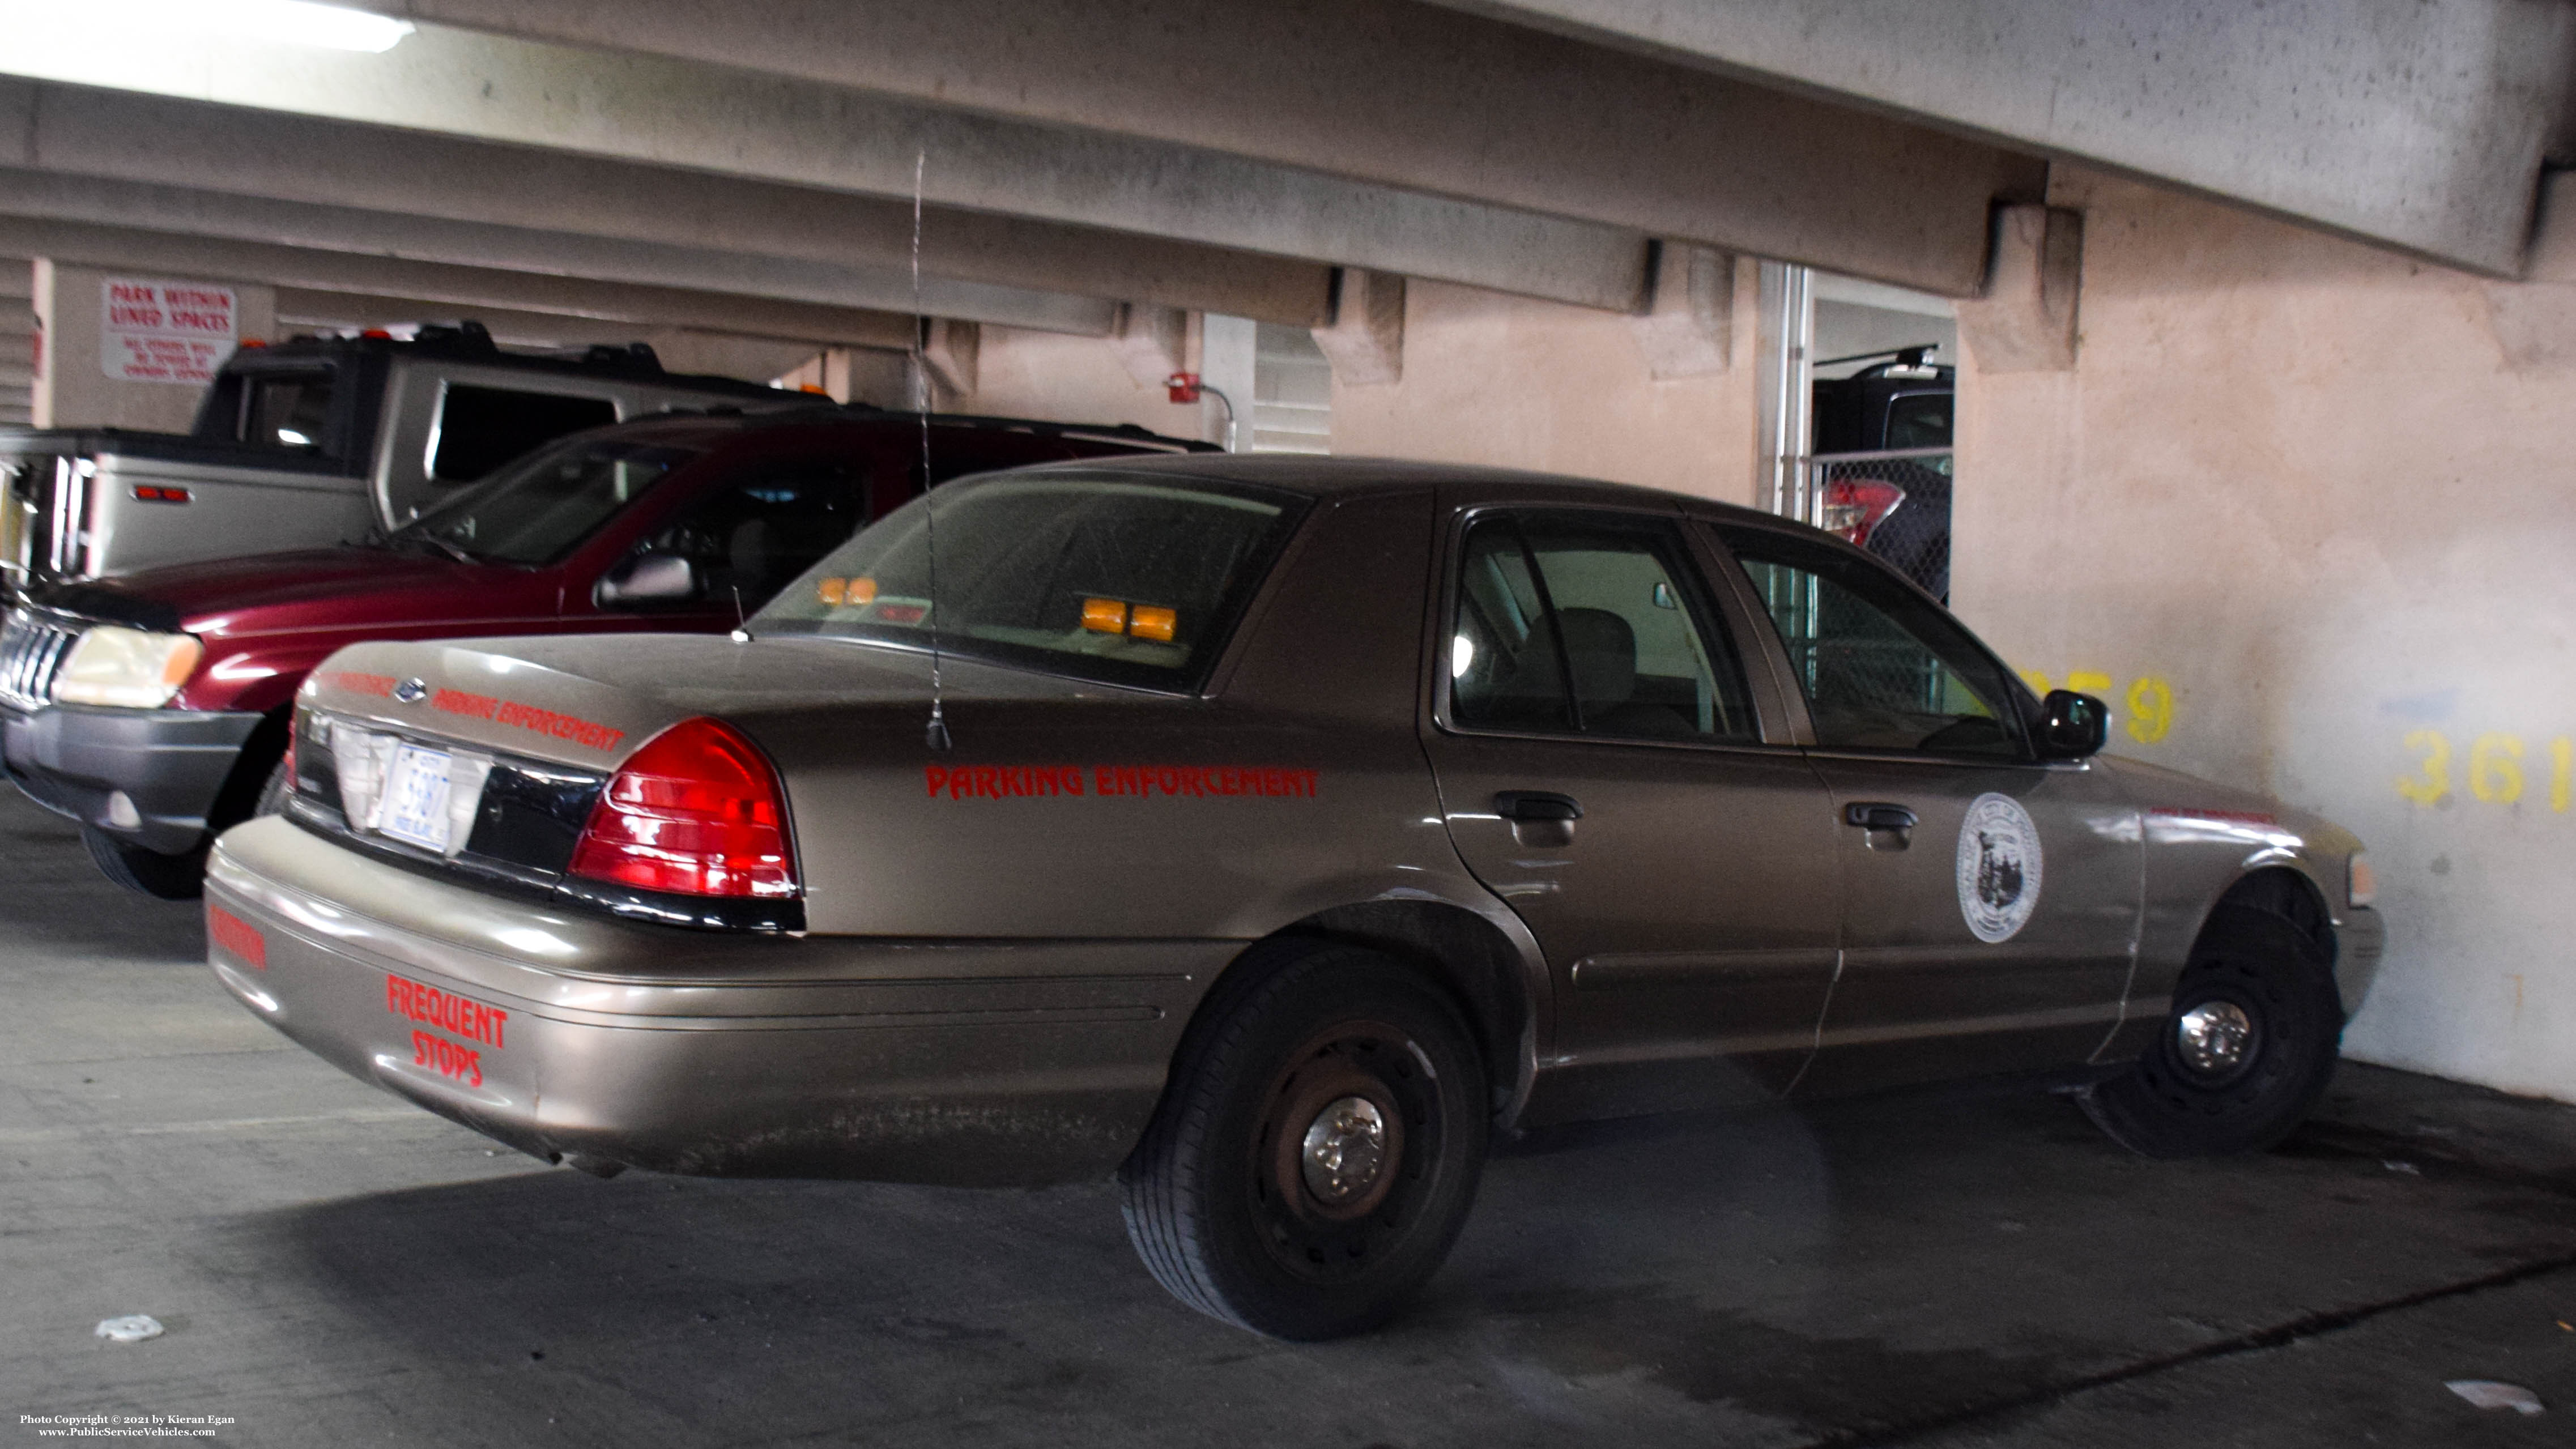 A photo  of Providence Parking Enforcement
            Car 5987, a 2003-2005 Ford Crown Victoria Police Interceptor             taken by Kieran Egan